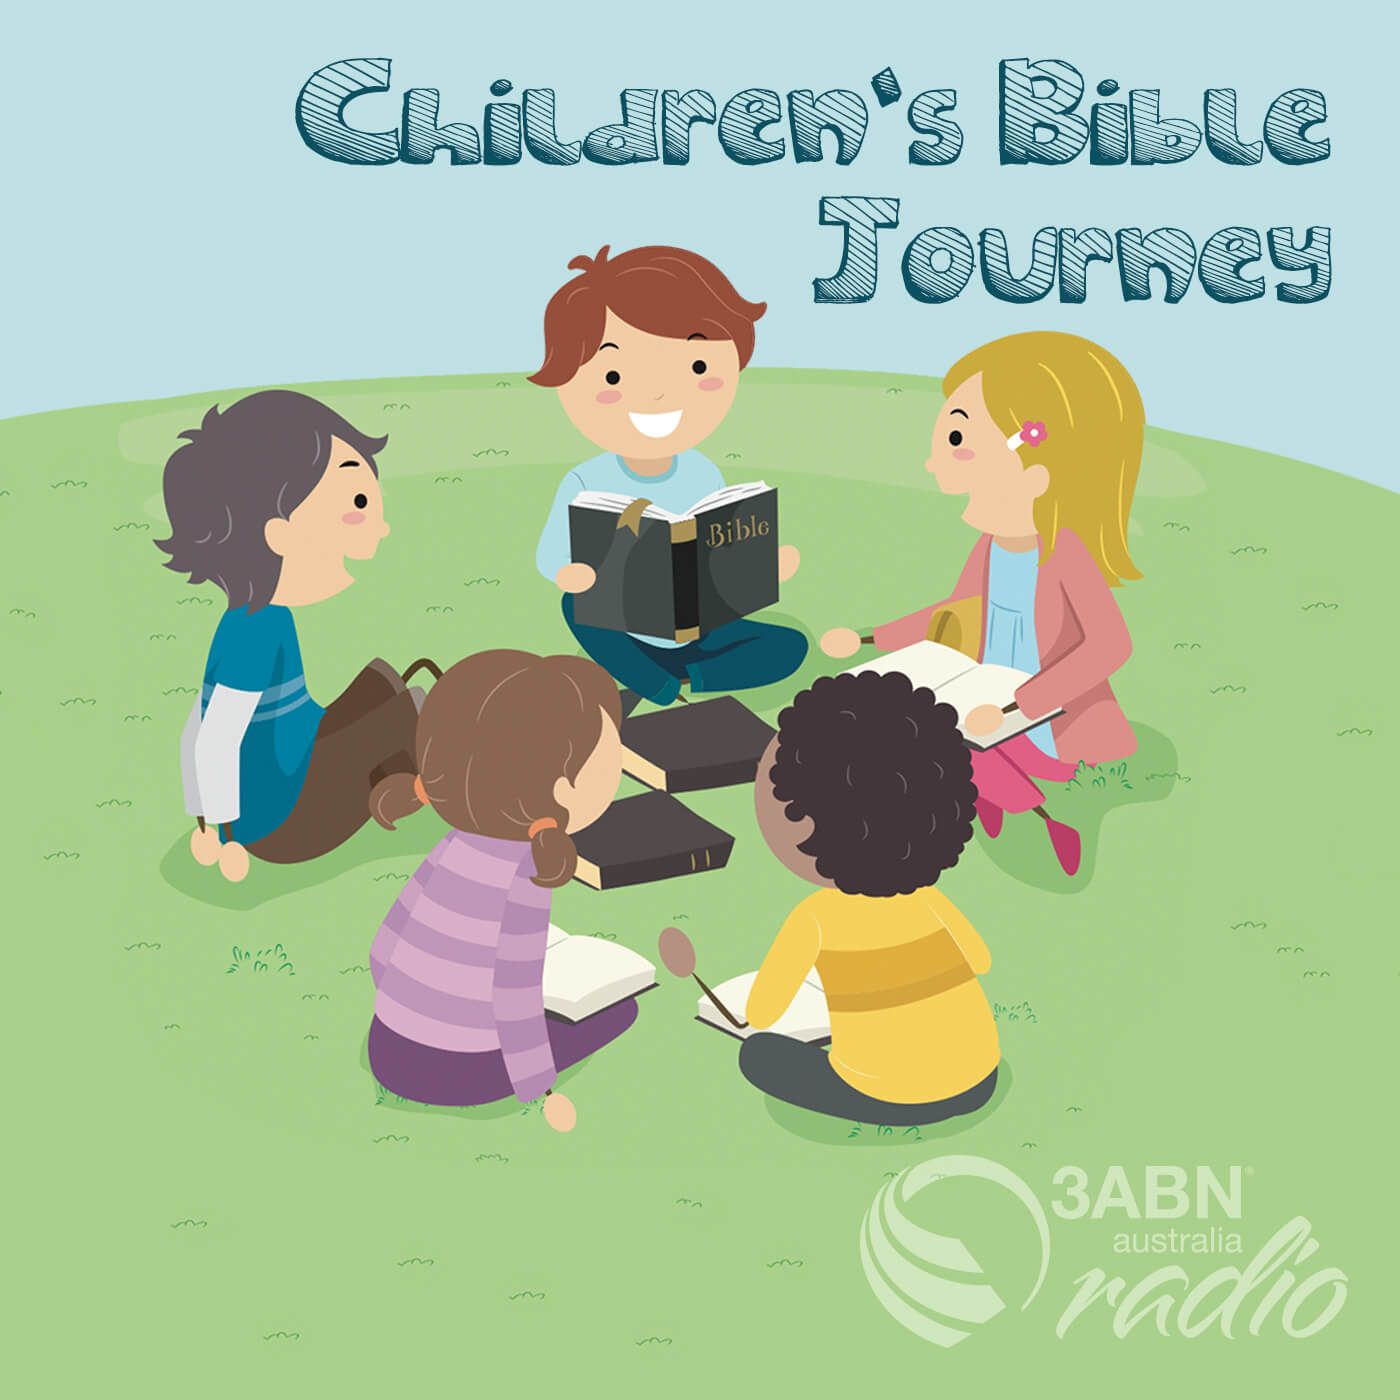 Children's Bible Journey - 2196